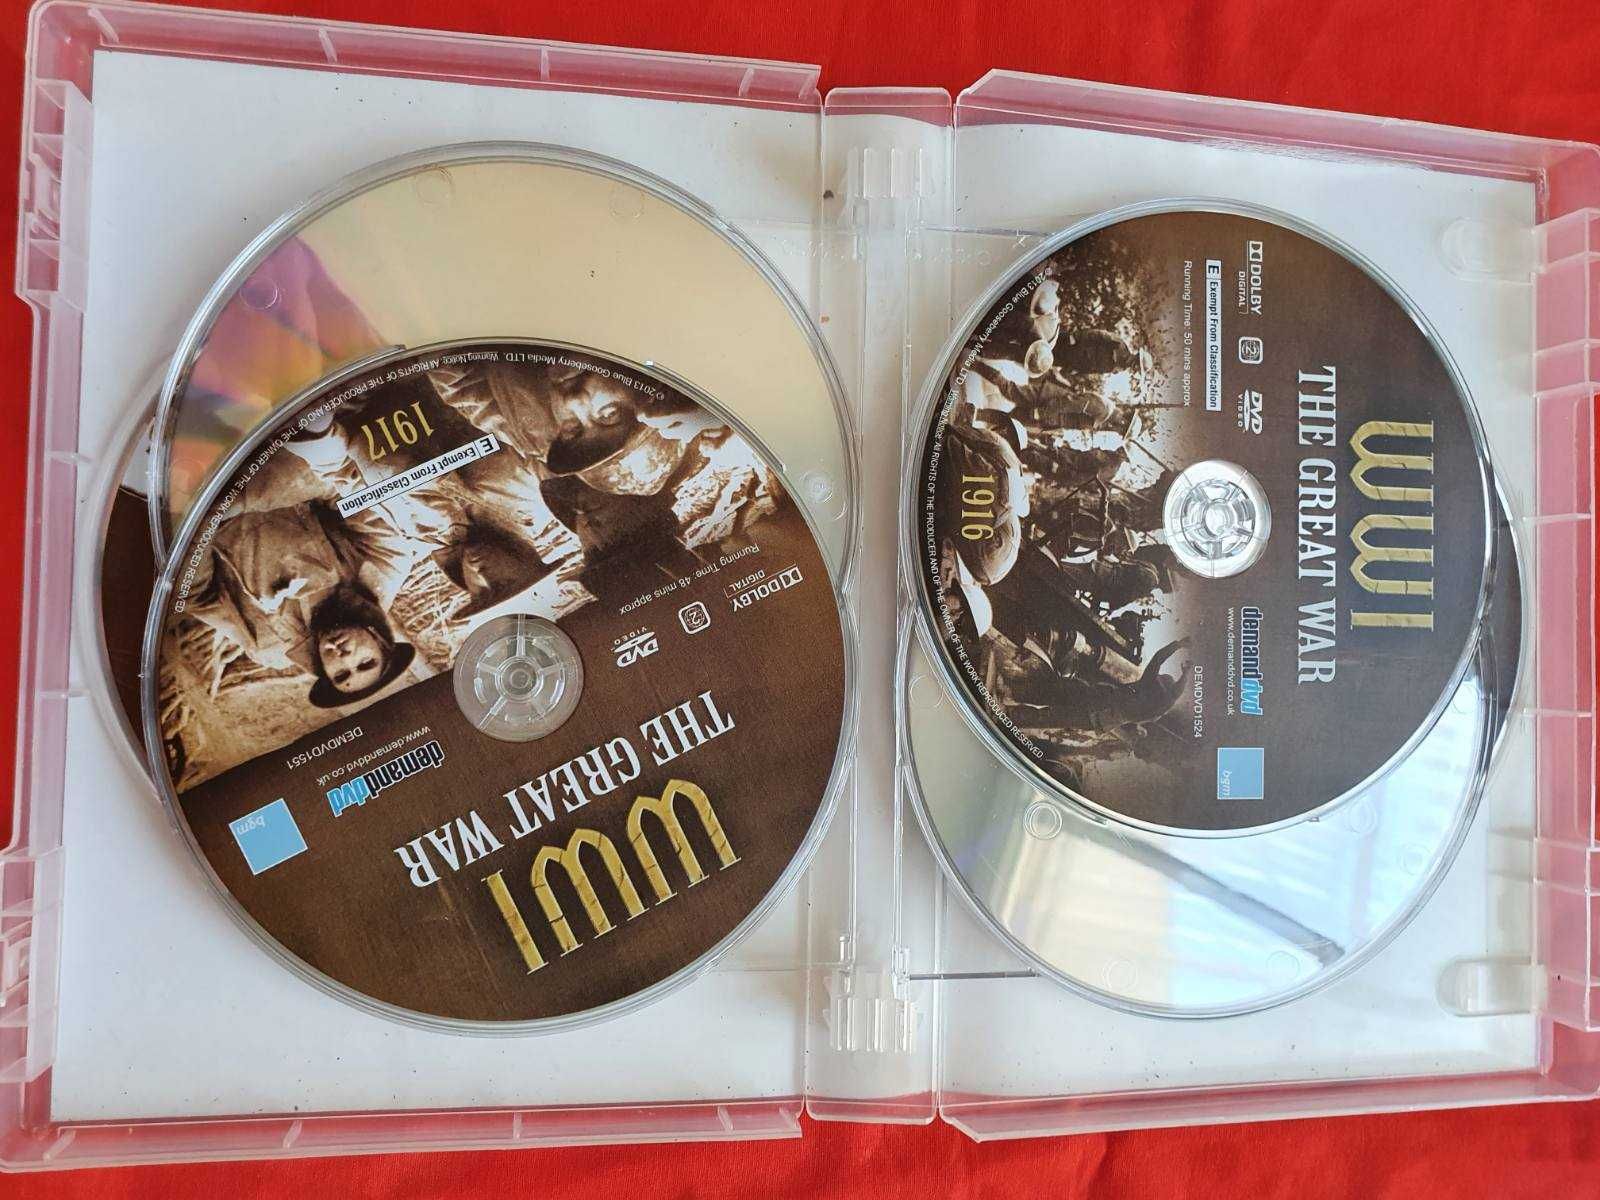 Актуально WW1 The Great War 1914 1918 (Box Set) History DVD 6 Disc